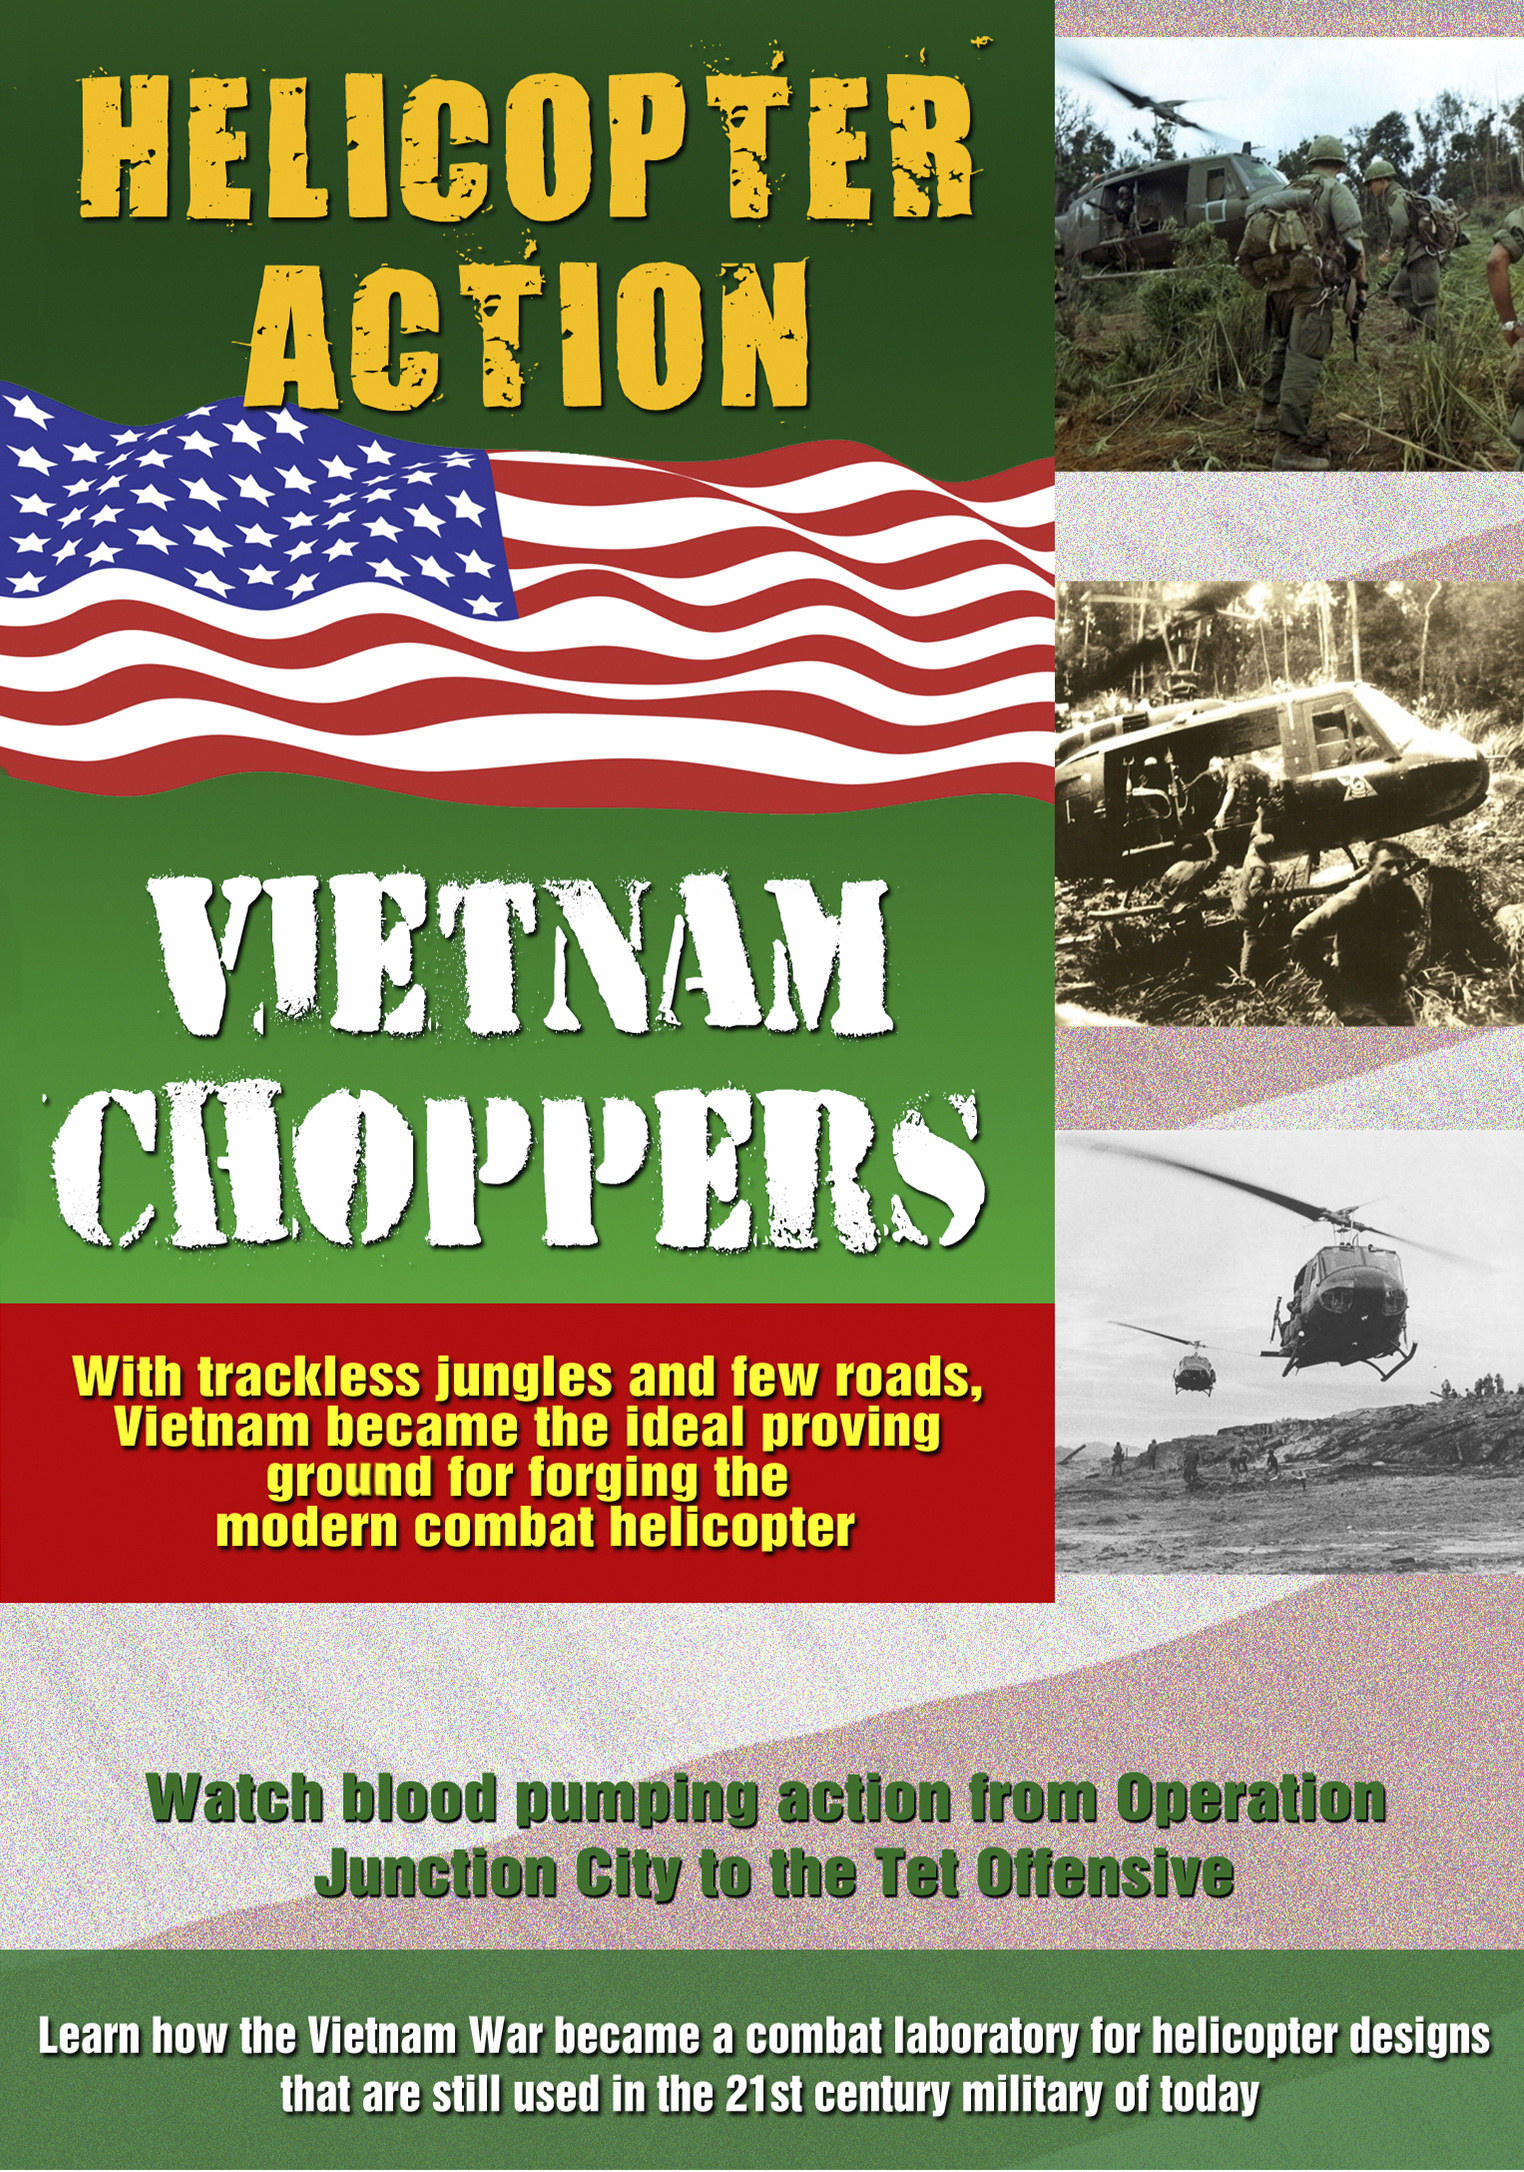 J131 - Military History Vietnam Choppers